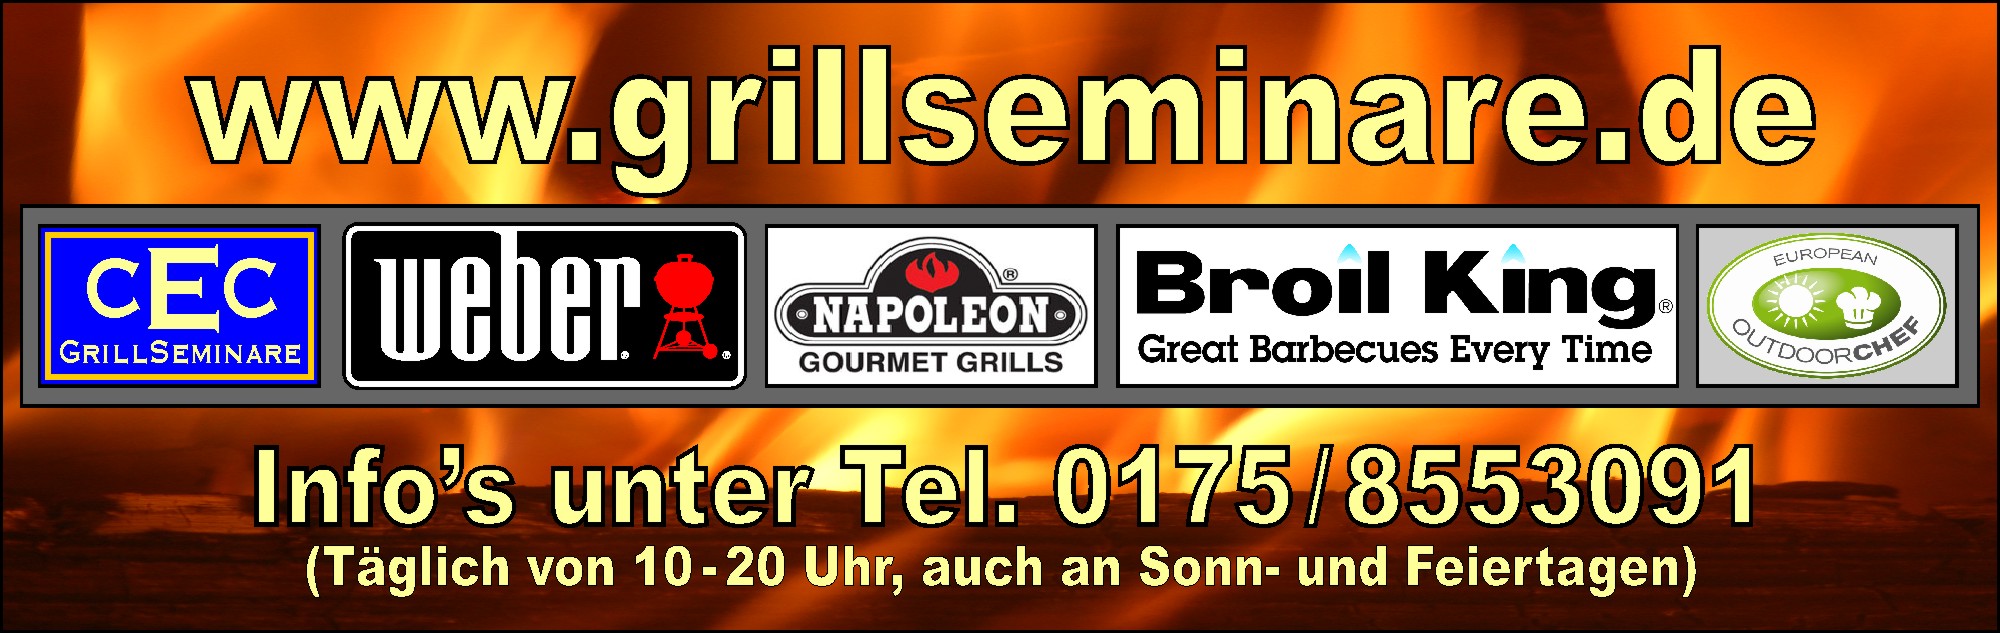 Weber Grills, Napoleon Grills, Broil King Grills, Outdoorchef Grills